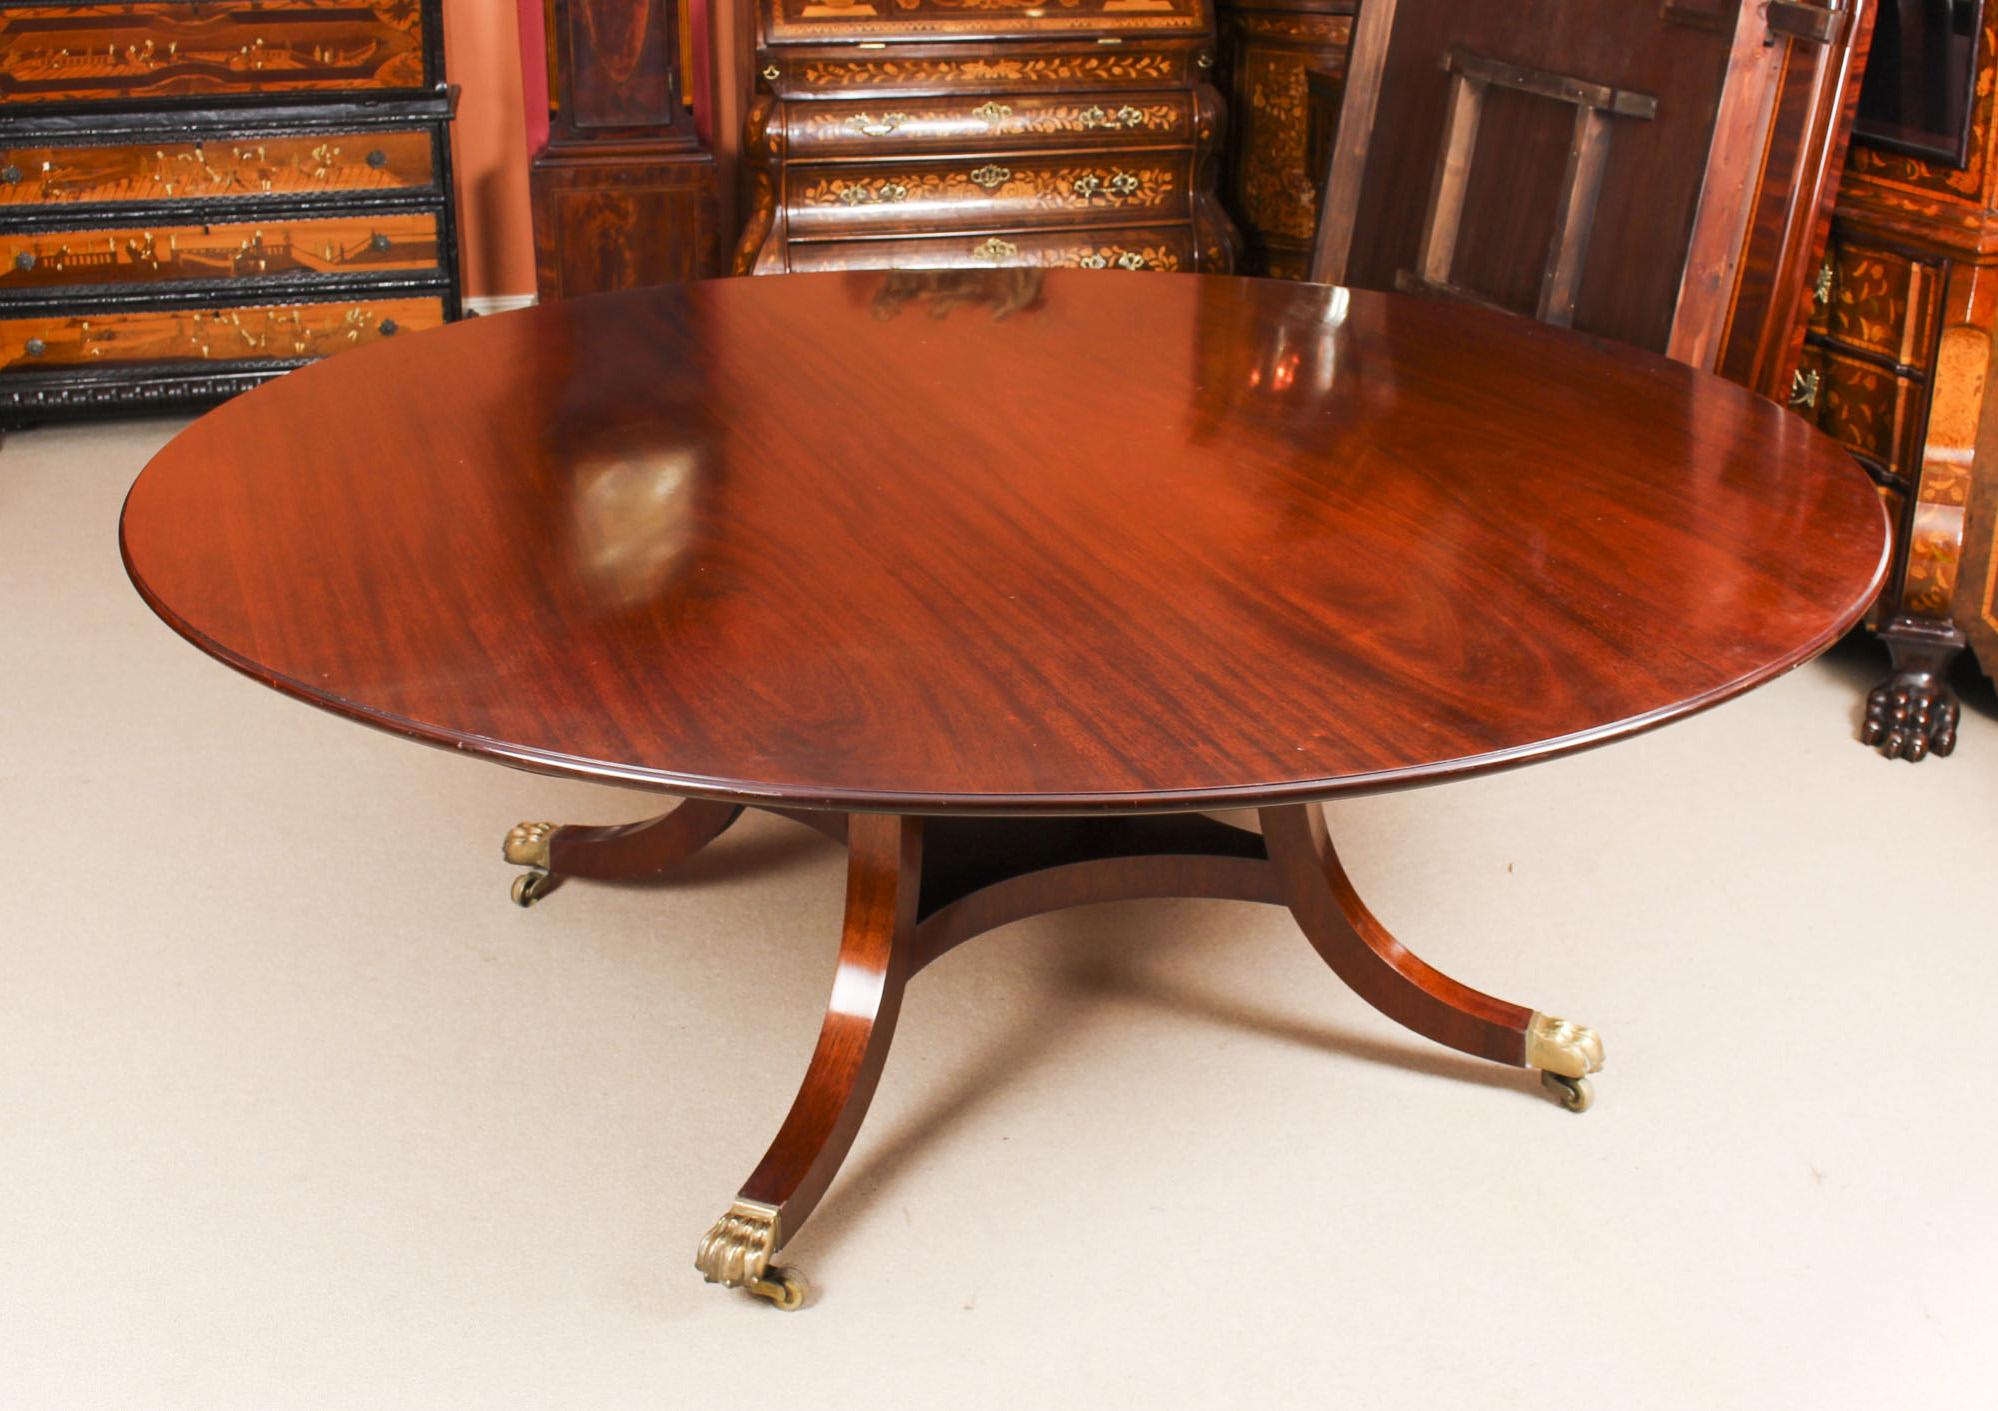 Regency Revival Vintage Dining Table & 8 Chairs William Tillman, 20th Century